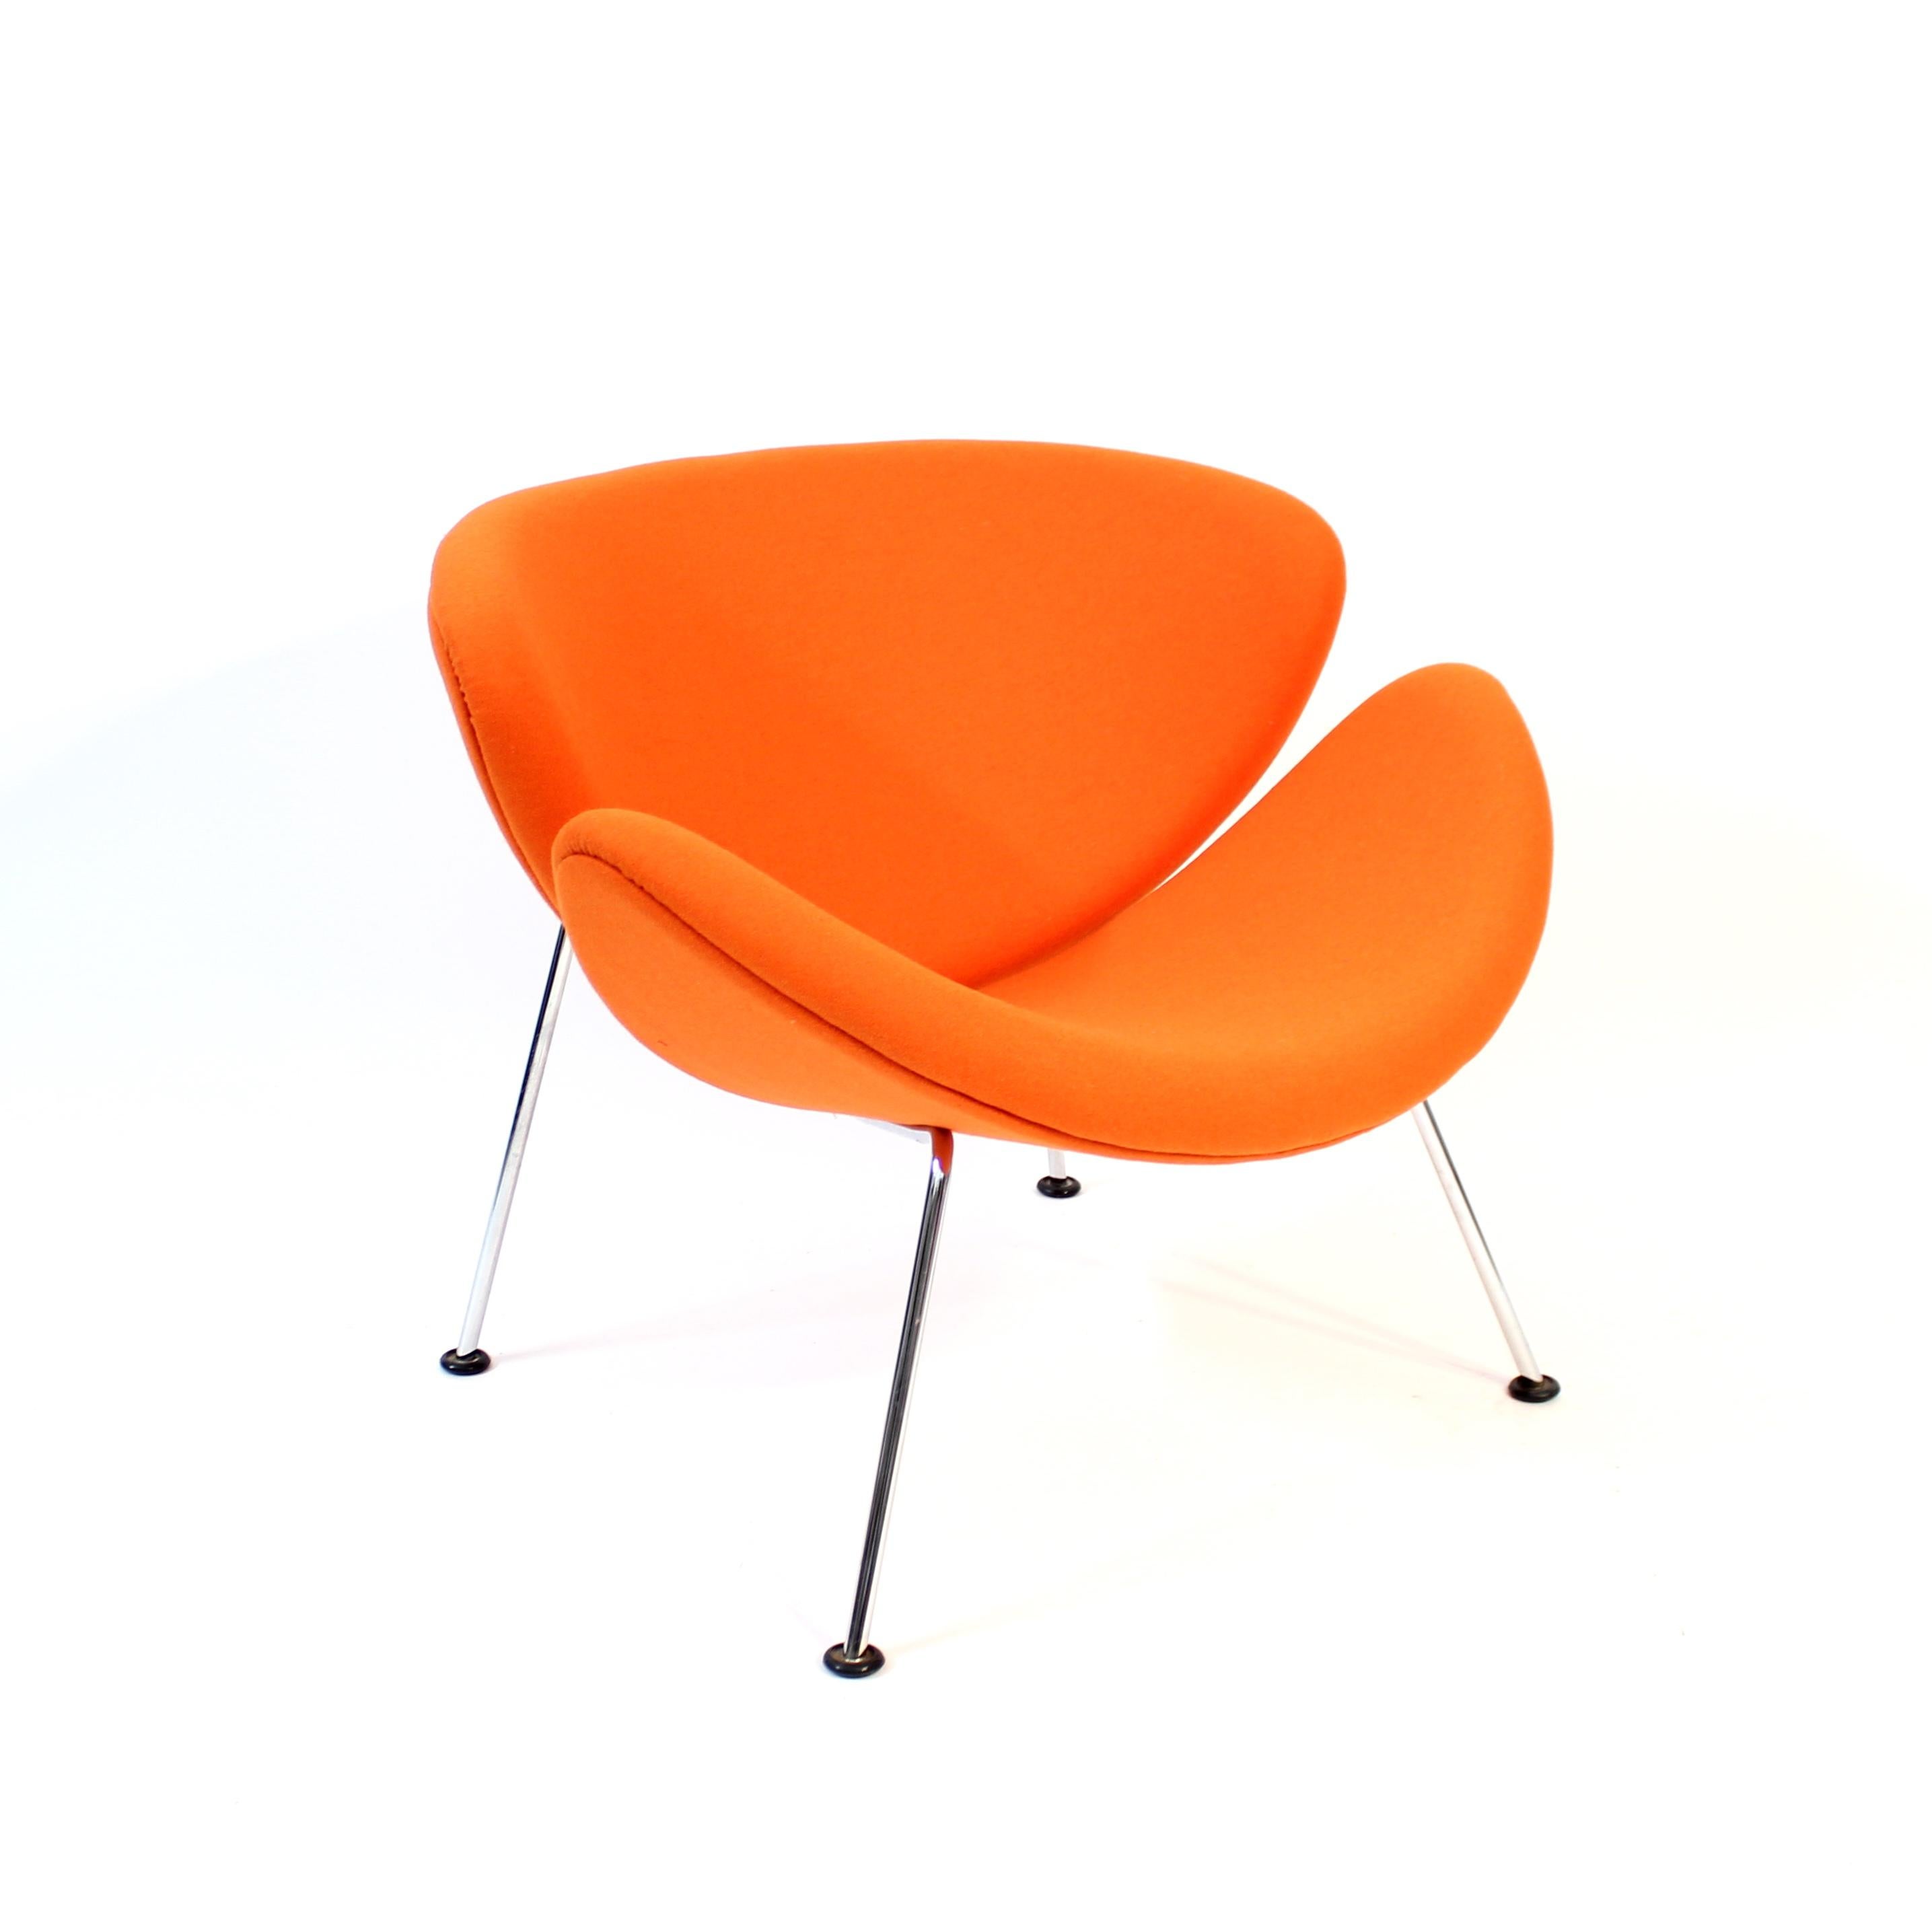 Space Age Pierre Paulin, Orange Slice chair, Artifort, 1960 For Sale